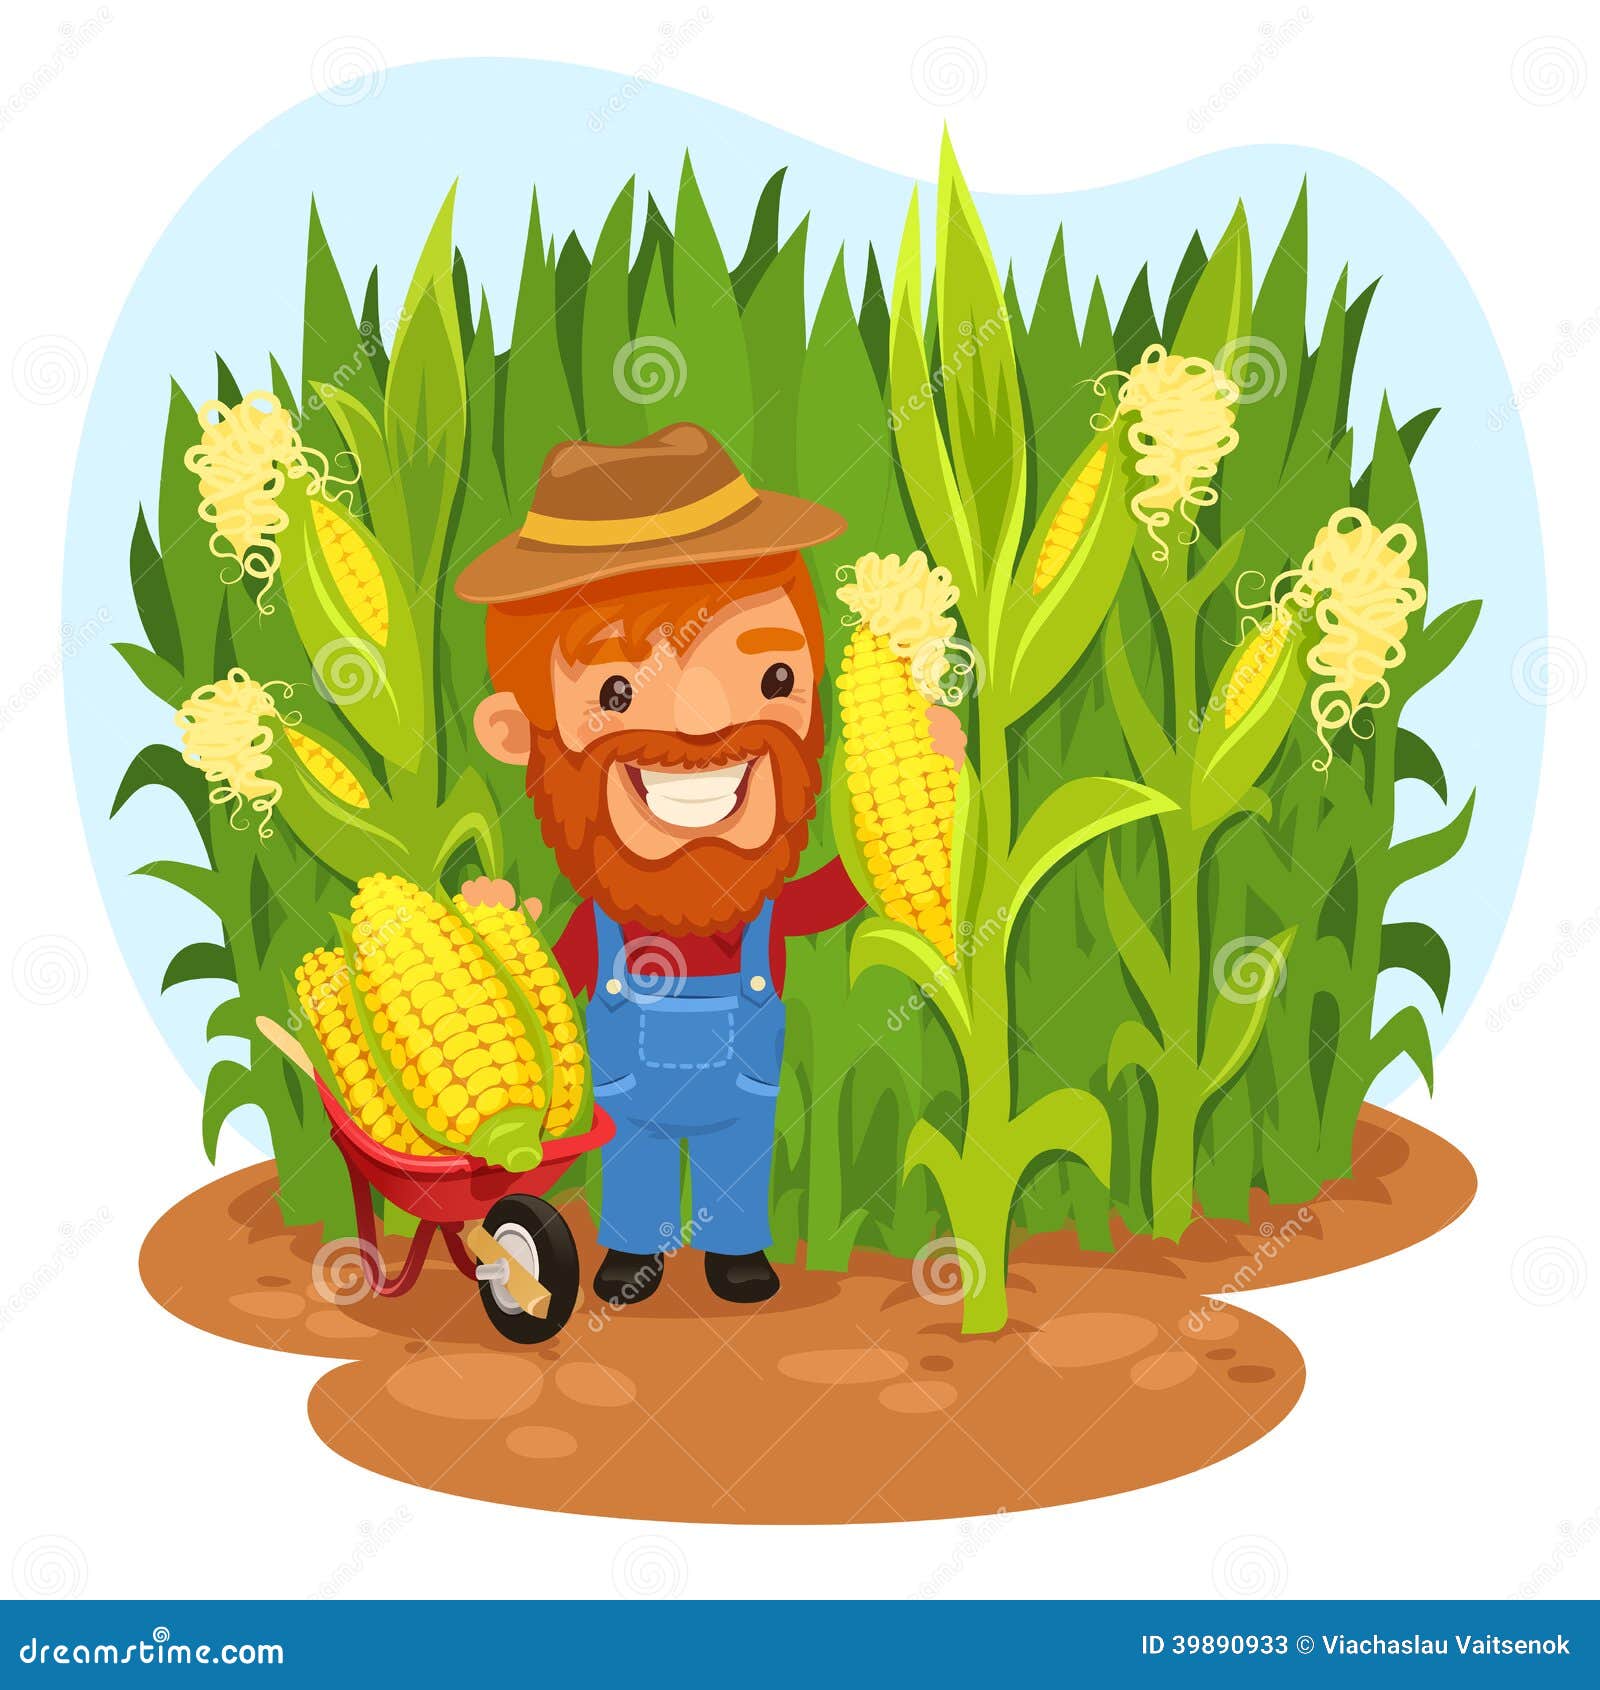 harvesting farmer in a cornfield